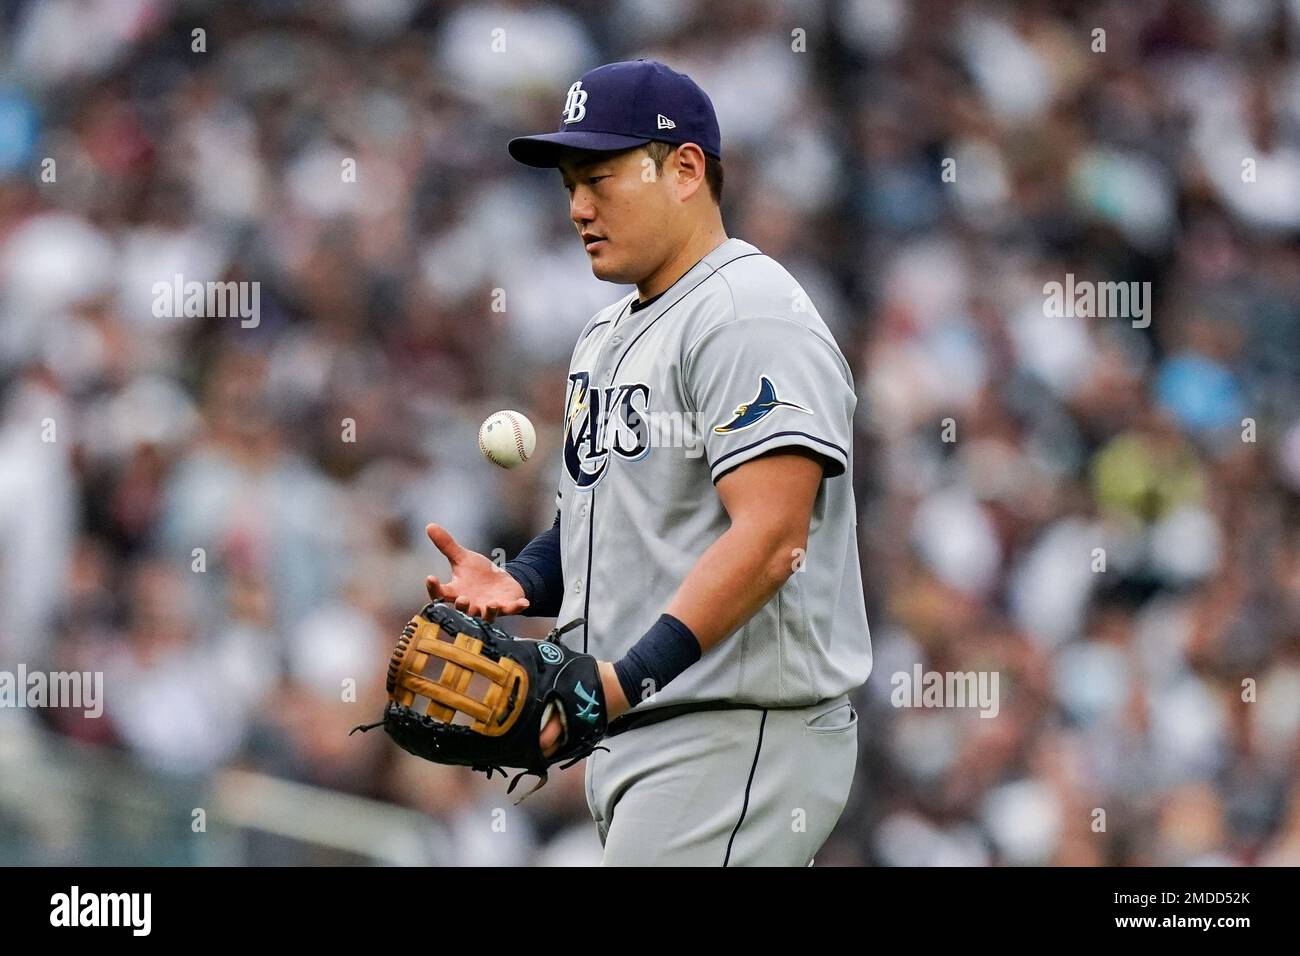 Folk hero. First baseman. Rays fans fall for Ji-Man Choi